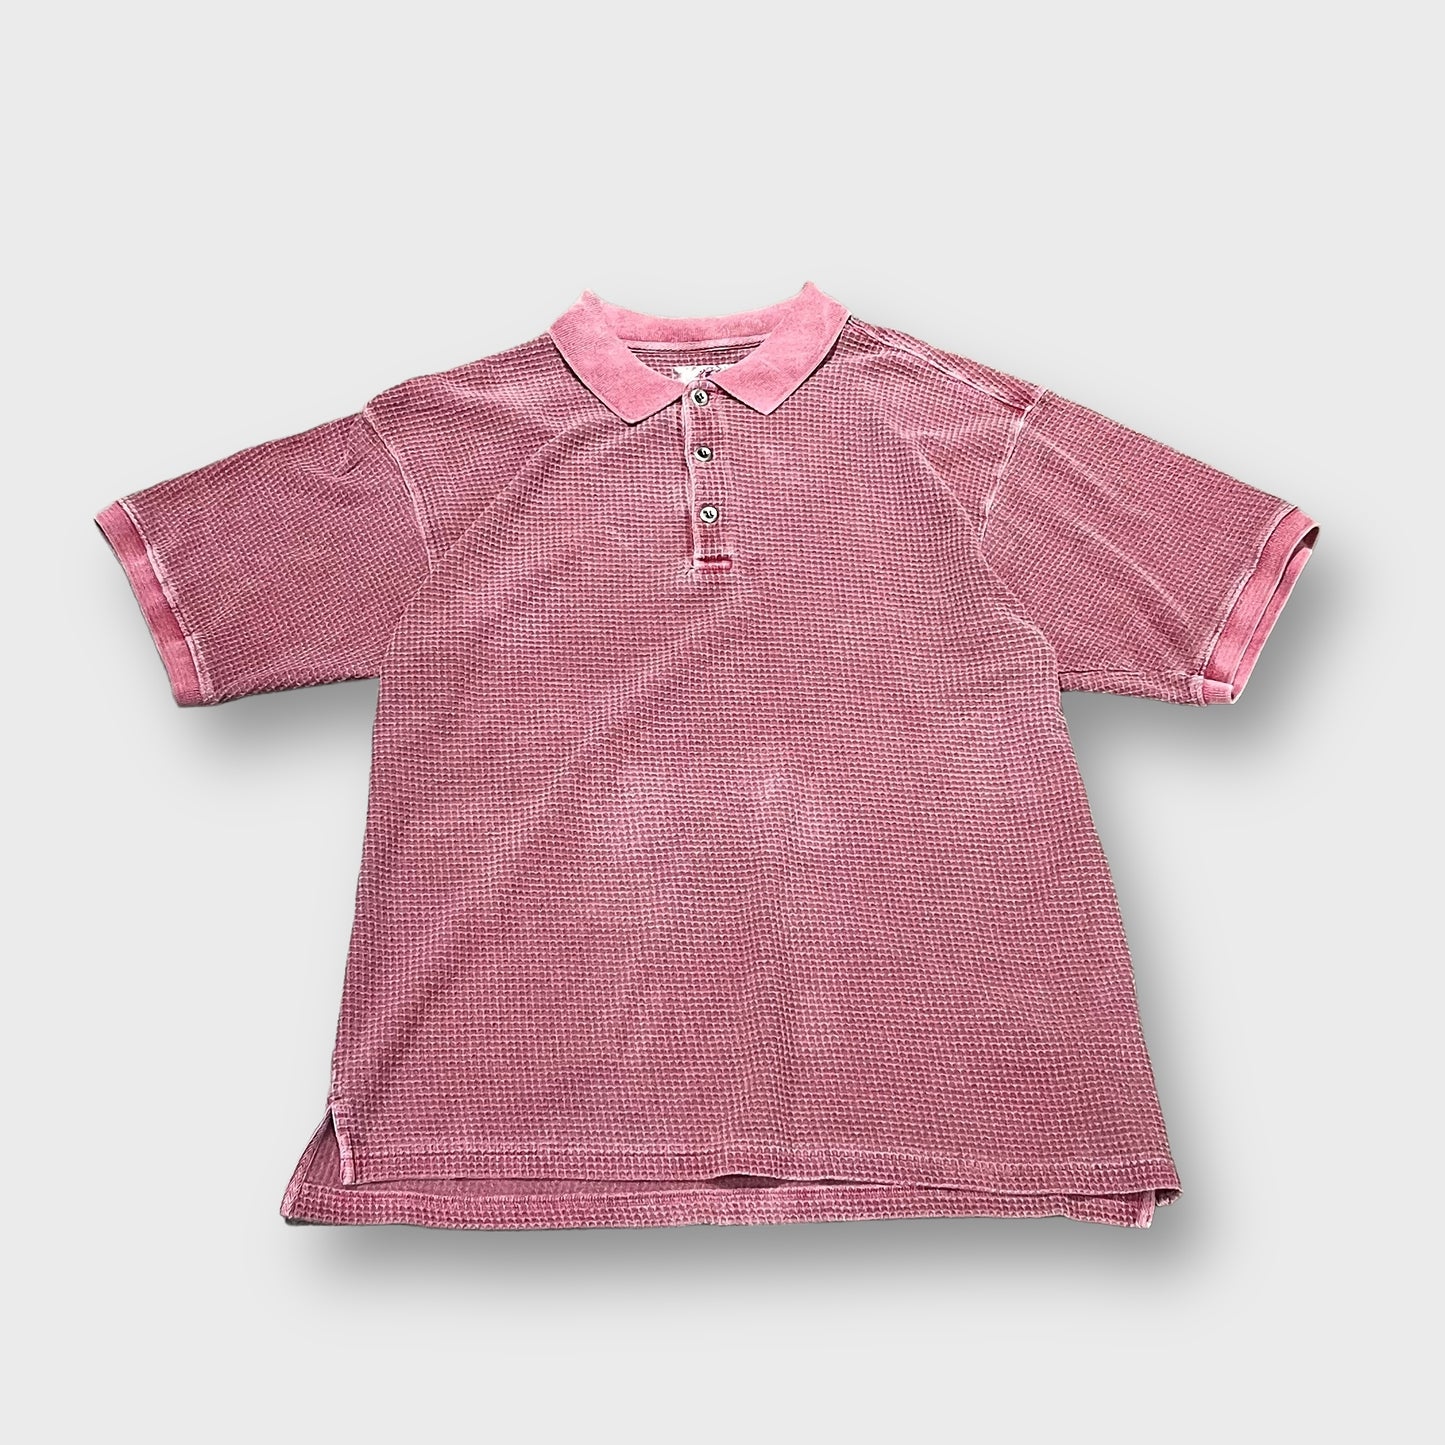 90’s “THE TERRITORY AHEAD “short sleeve cotton shirt